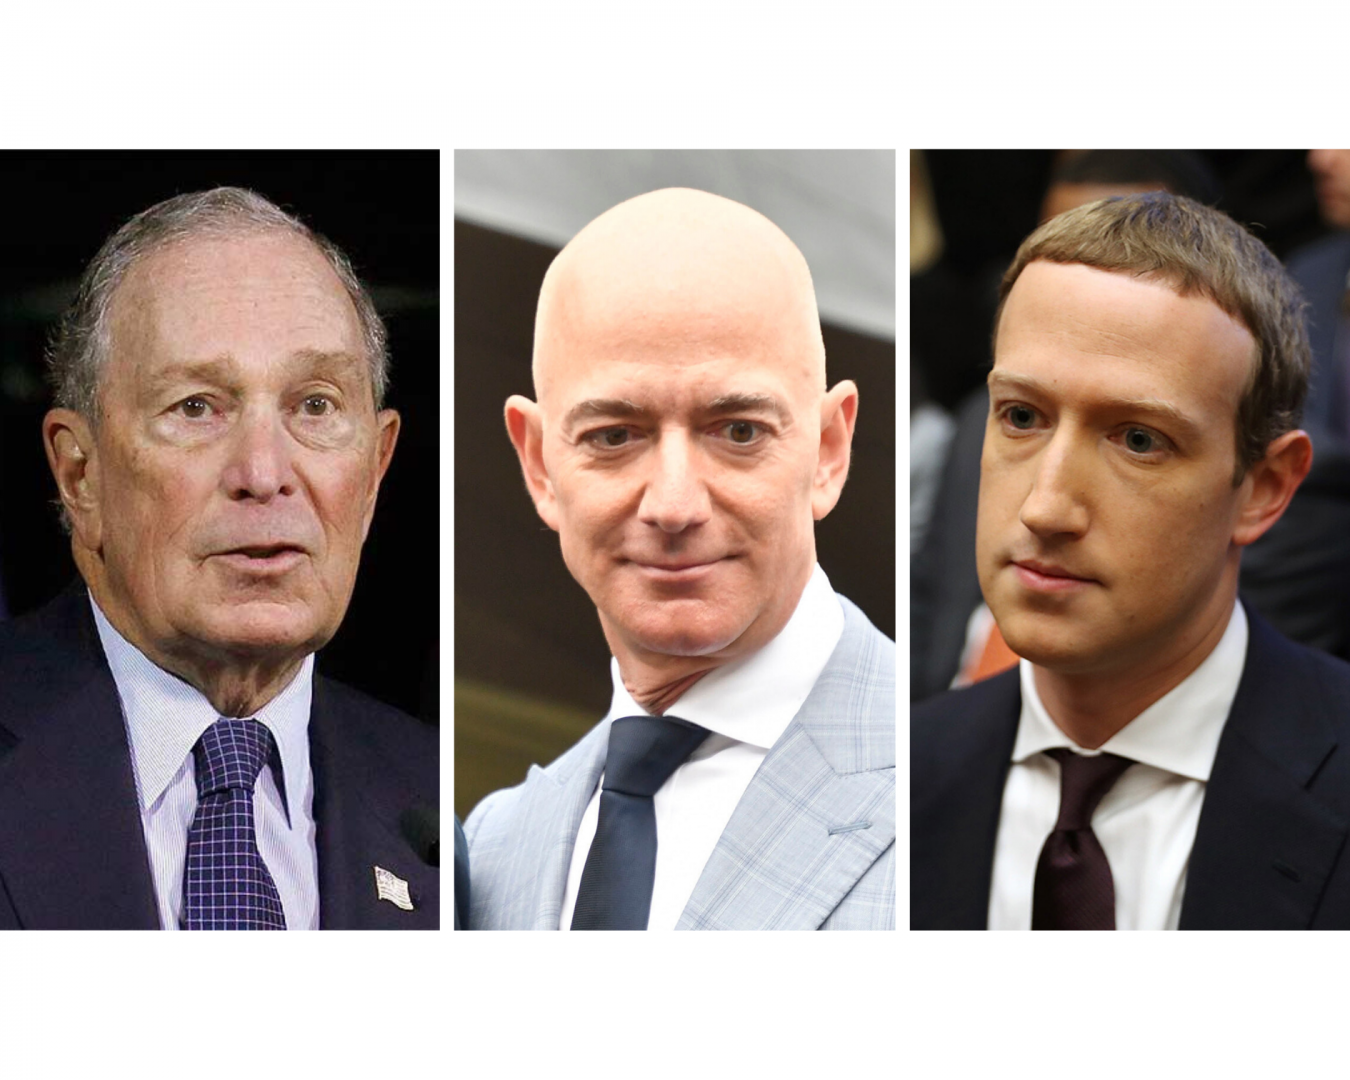 Pictured left to right: Billionaires Michael Bloomberg ($60 billion), Jeff Bezos ($119.9 billion), and Mark Zuckerberg ($68.8 billion). Net worths valued as of March 2, 2020 via Forbes.com. Photos courtesy of Tribune News Service